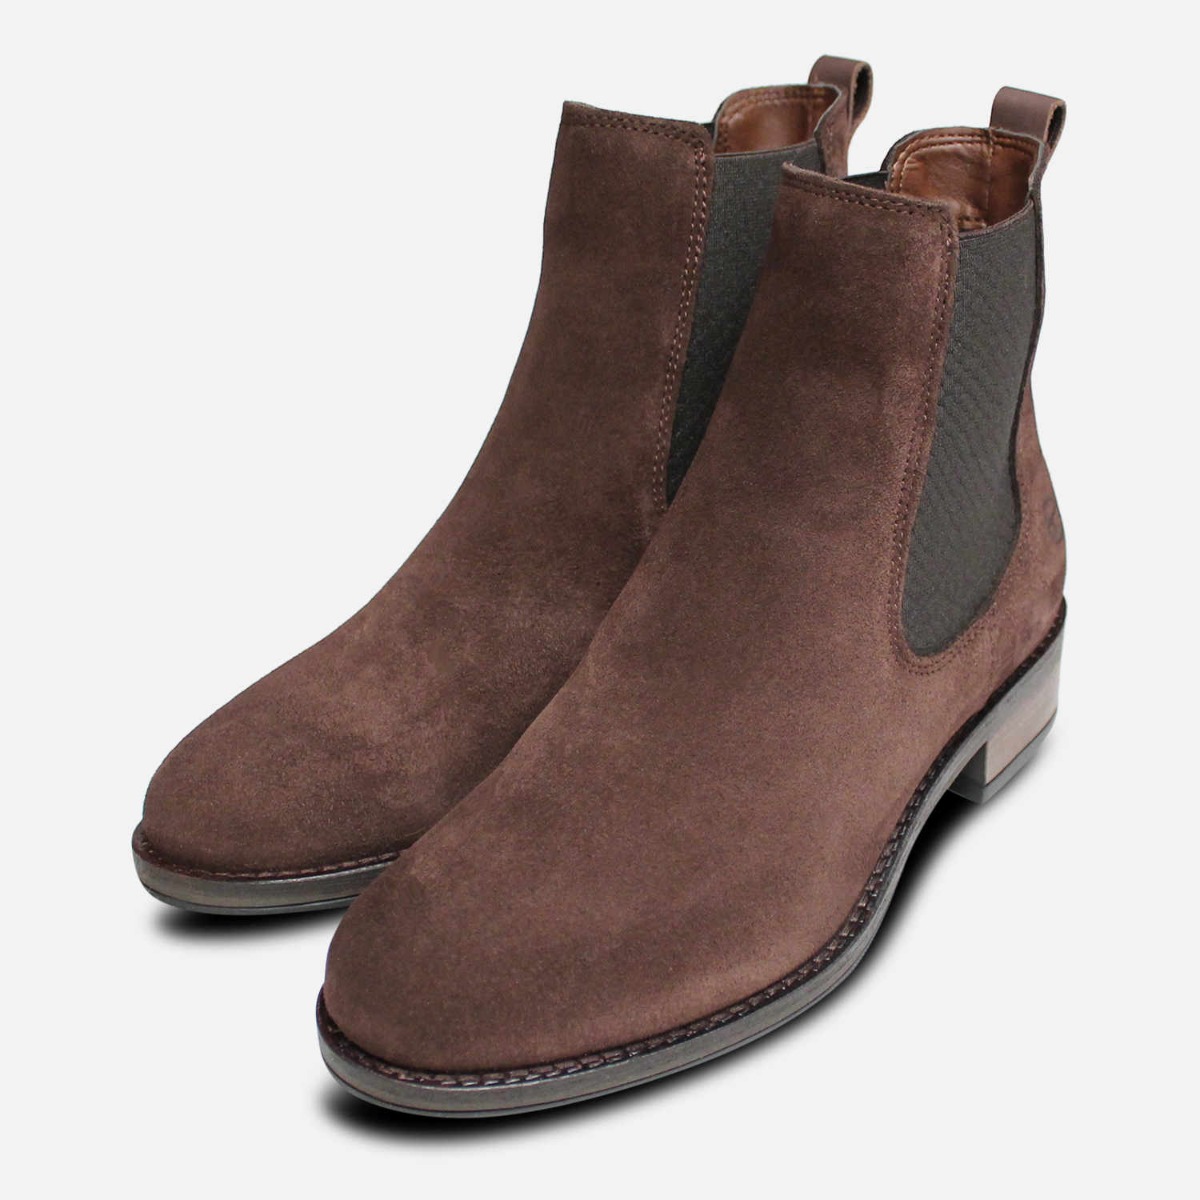 Brown Suede Leather Tamaris Ladies Ankle Chelsea Boots | eBay